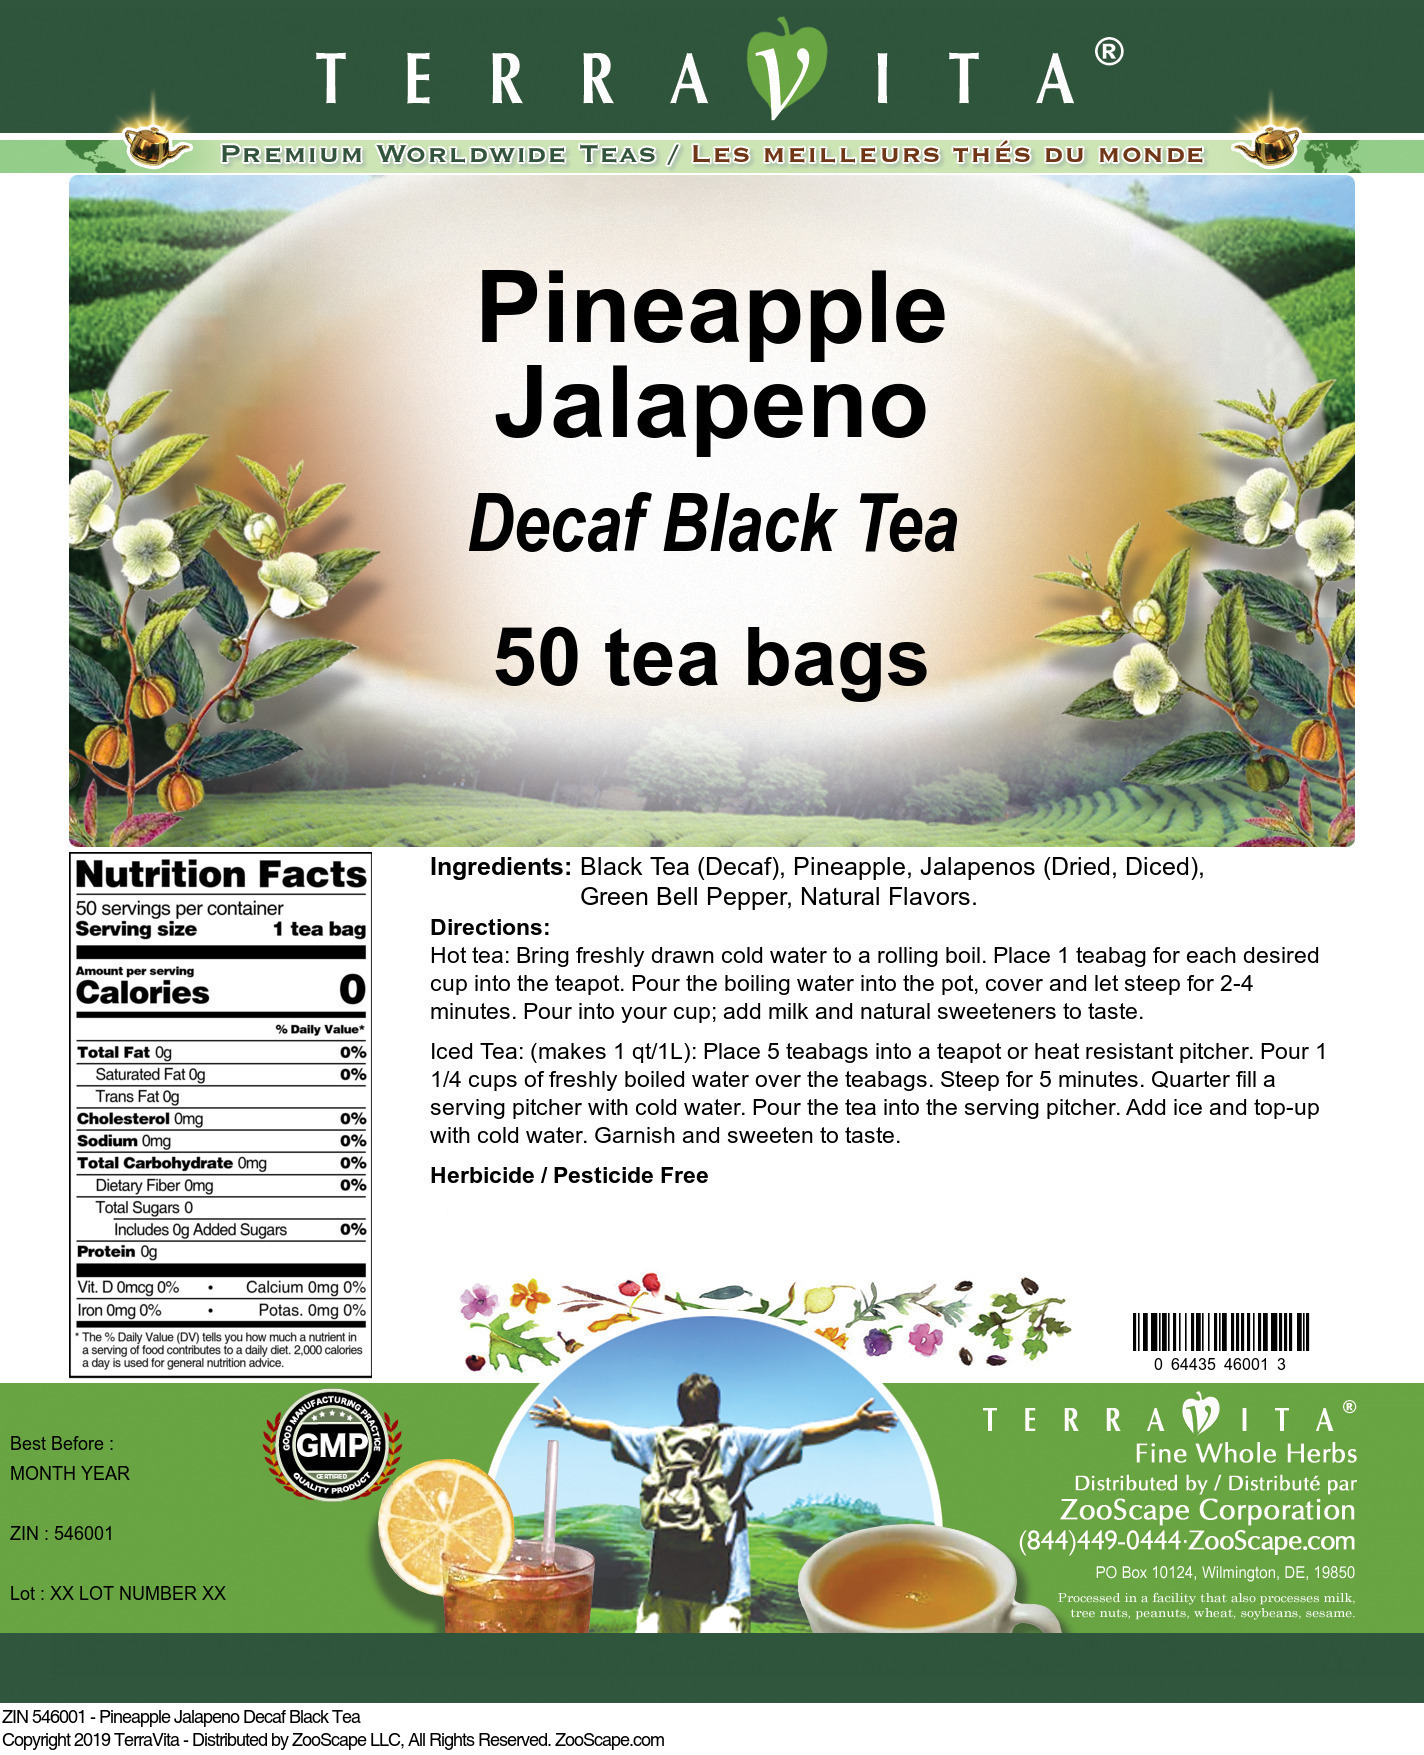 Pineapple Jalapeno Decaf Black Tea - Label